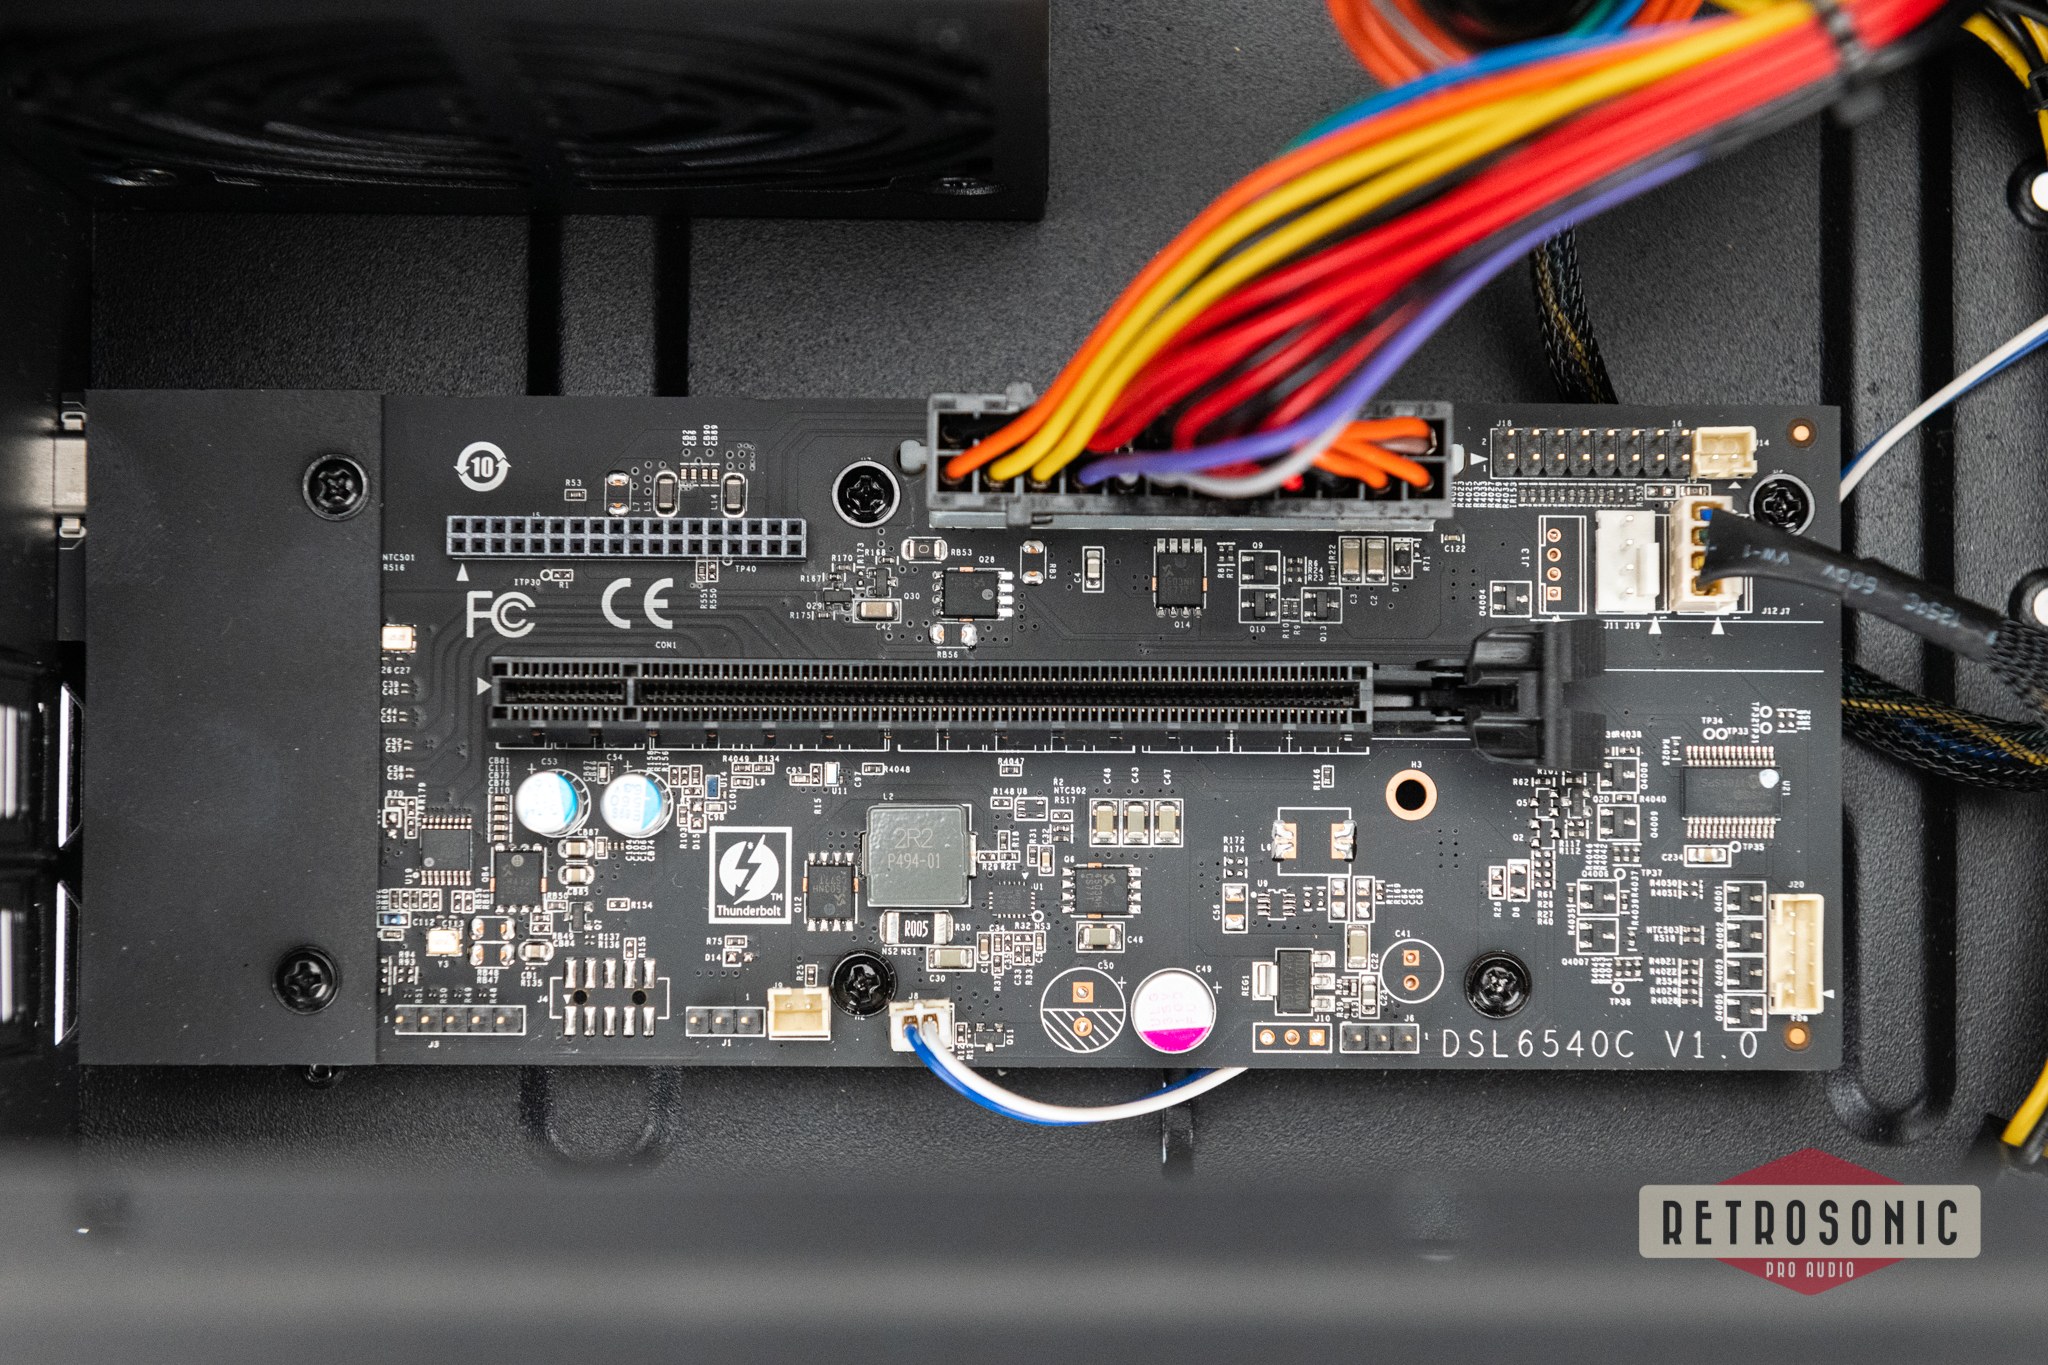 Sonnet GPU-350W-TB3Z eGFX Breakaway Box for TB3 to eGPU PCIe #1 NEW